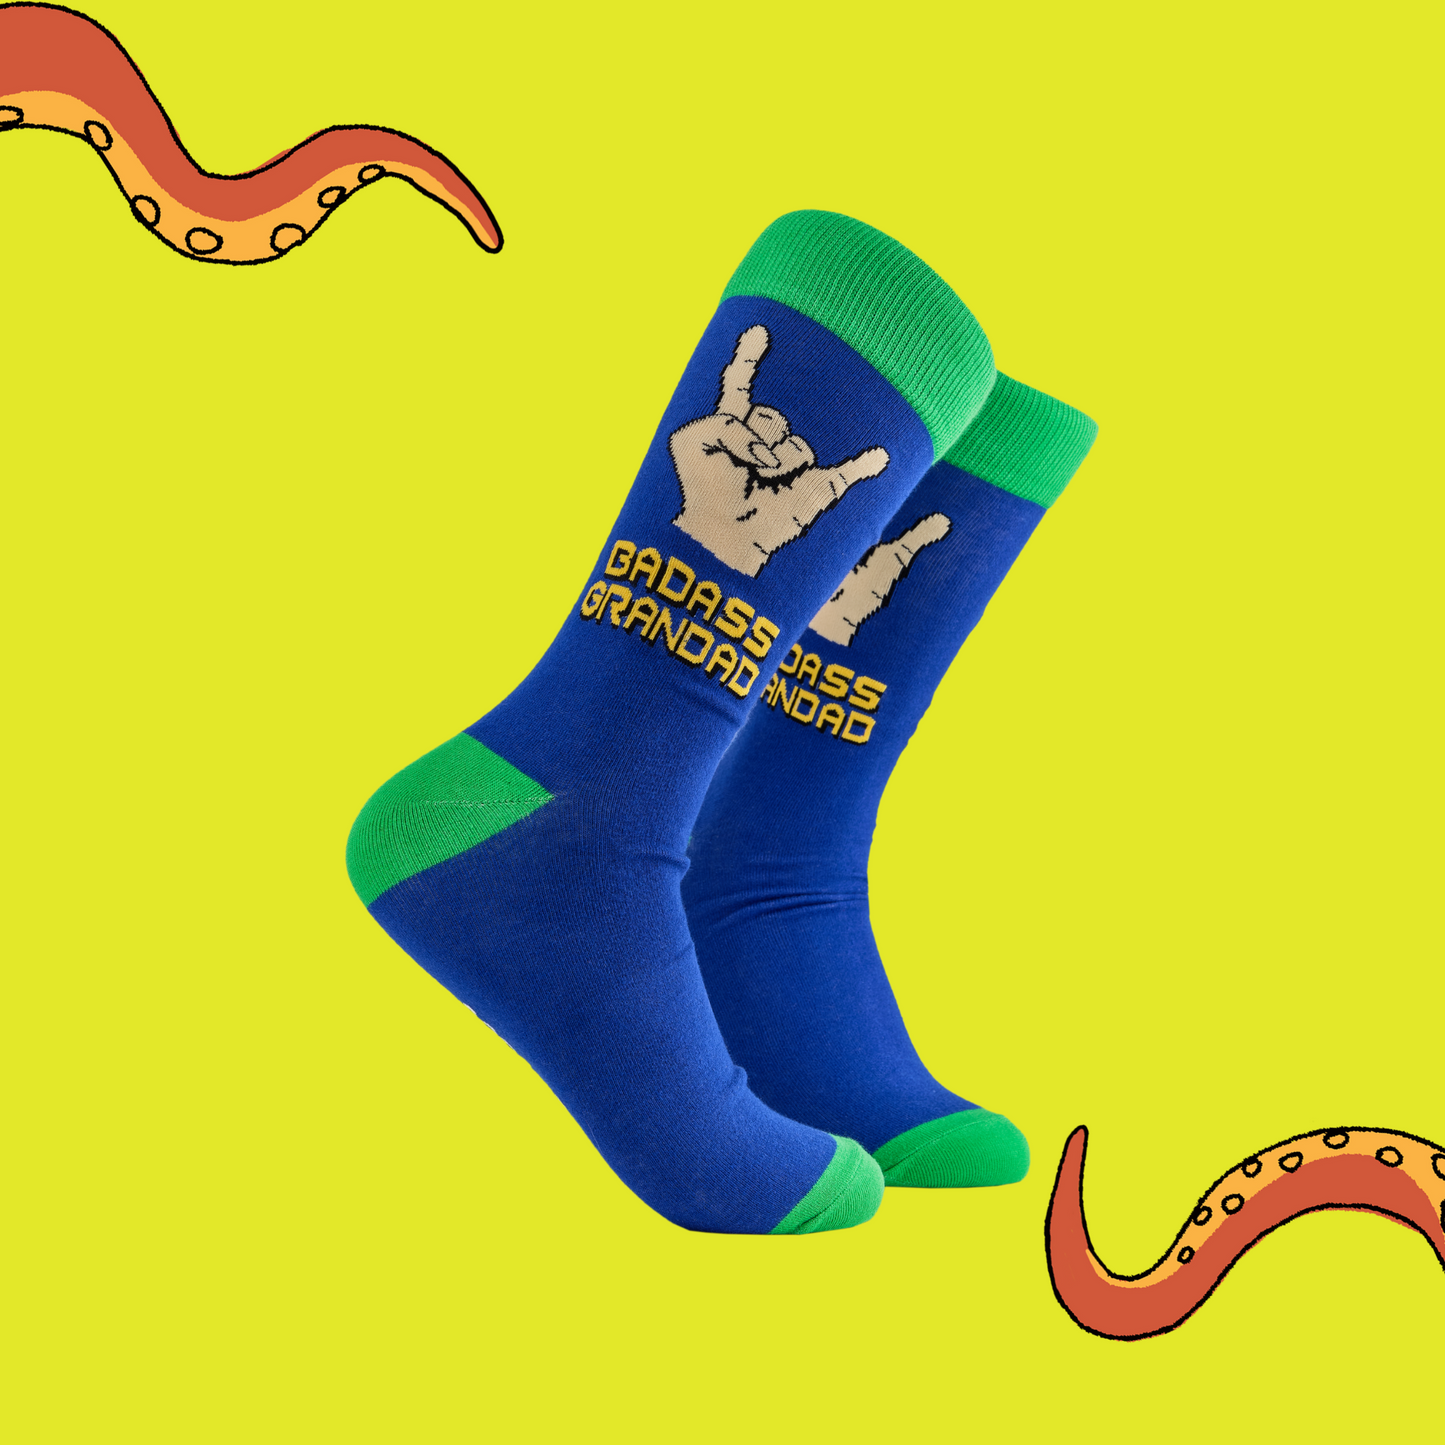 Badass Grandad Socks. A pair of socks depicting metal horns that say 'Badass Grandad. Blue legs, green cuff, heel and toe.